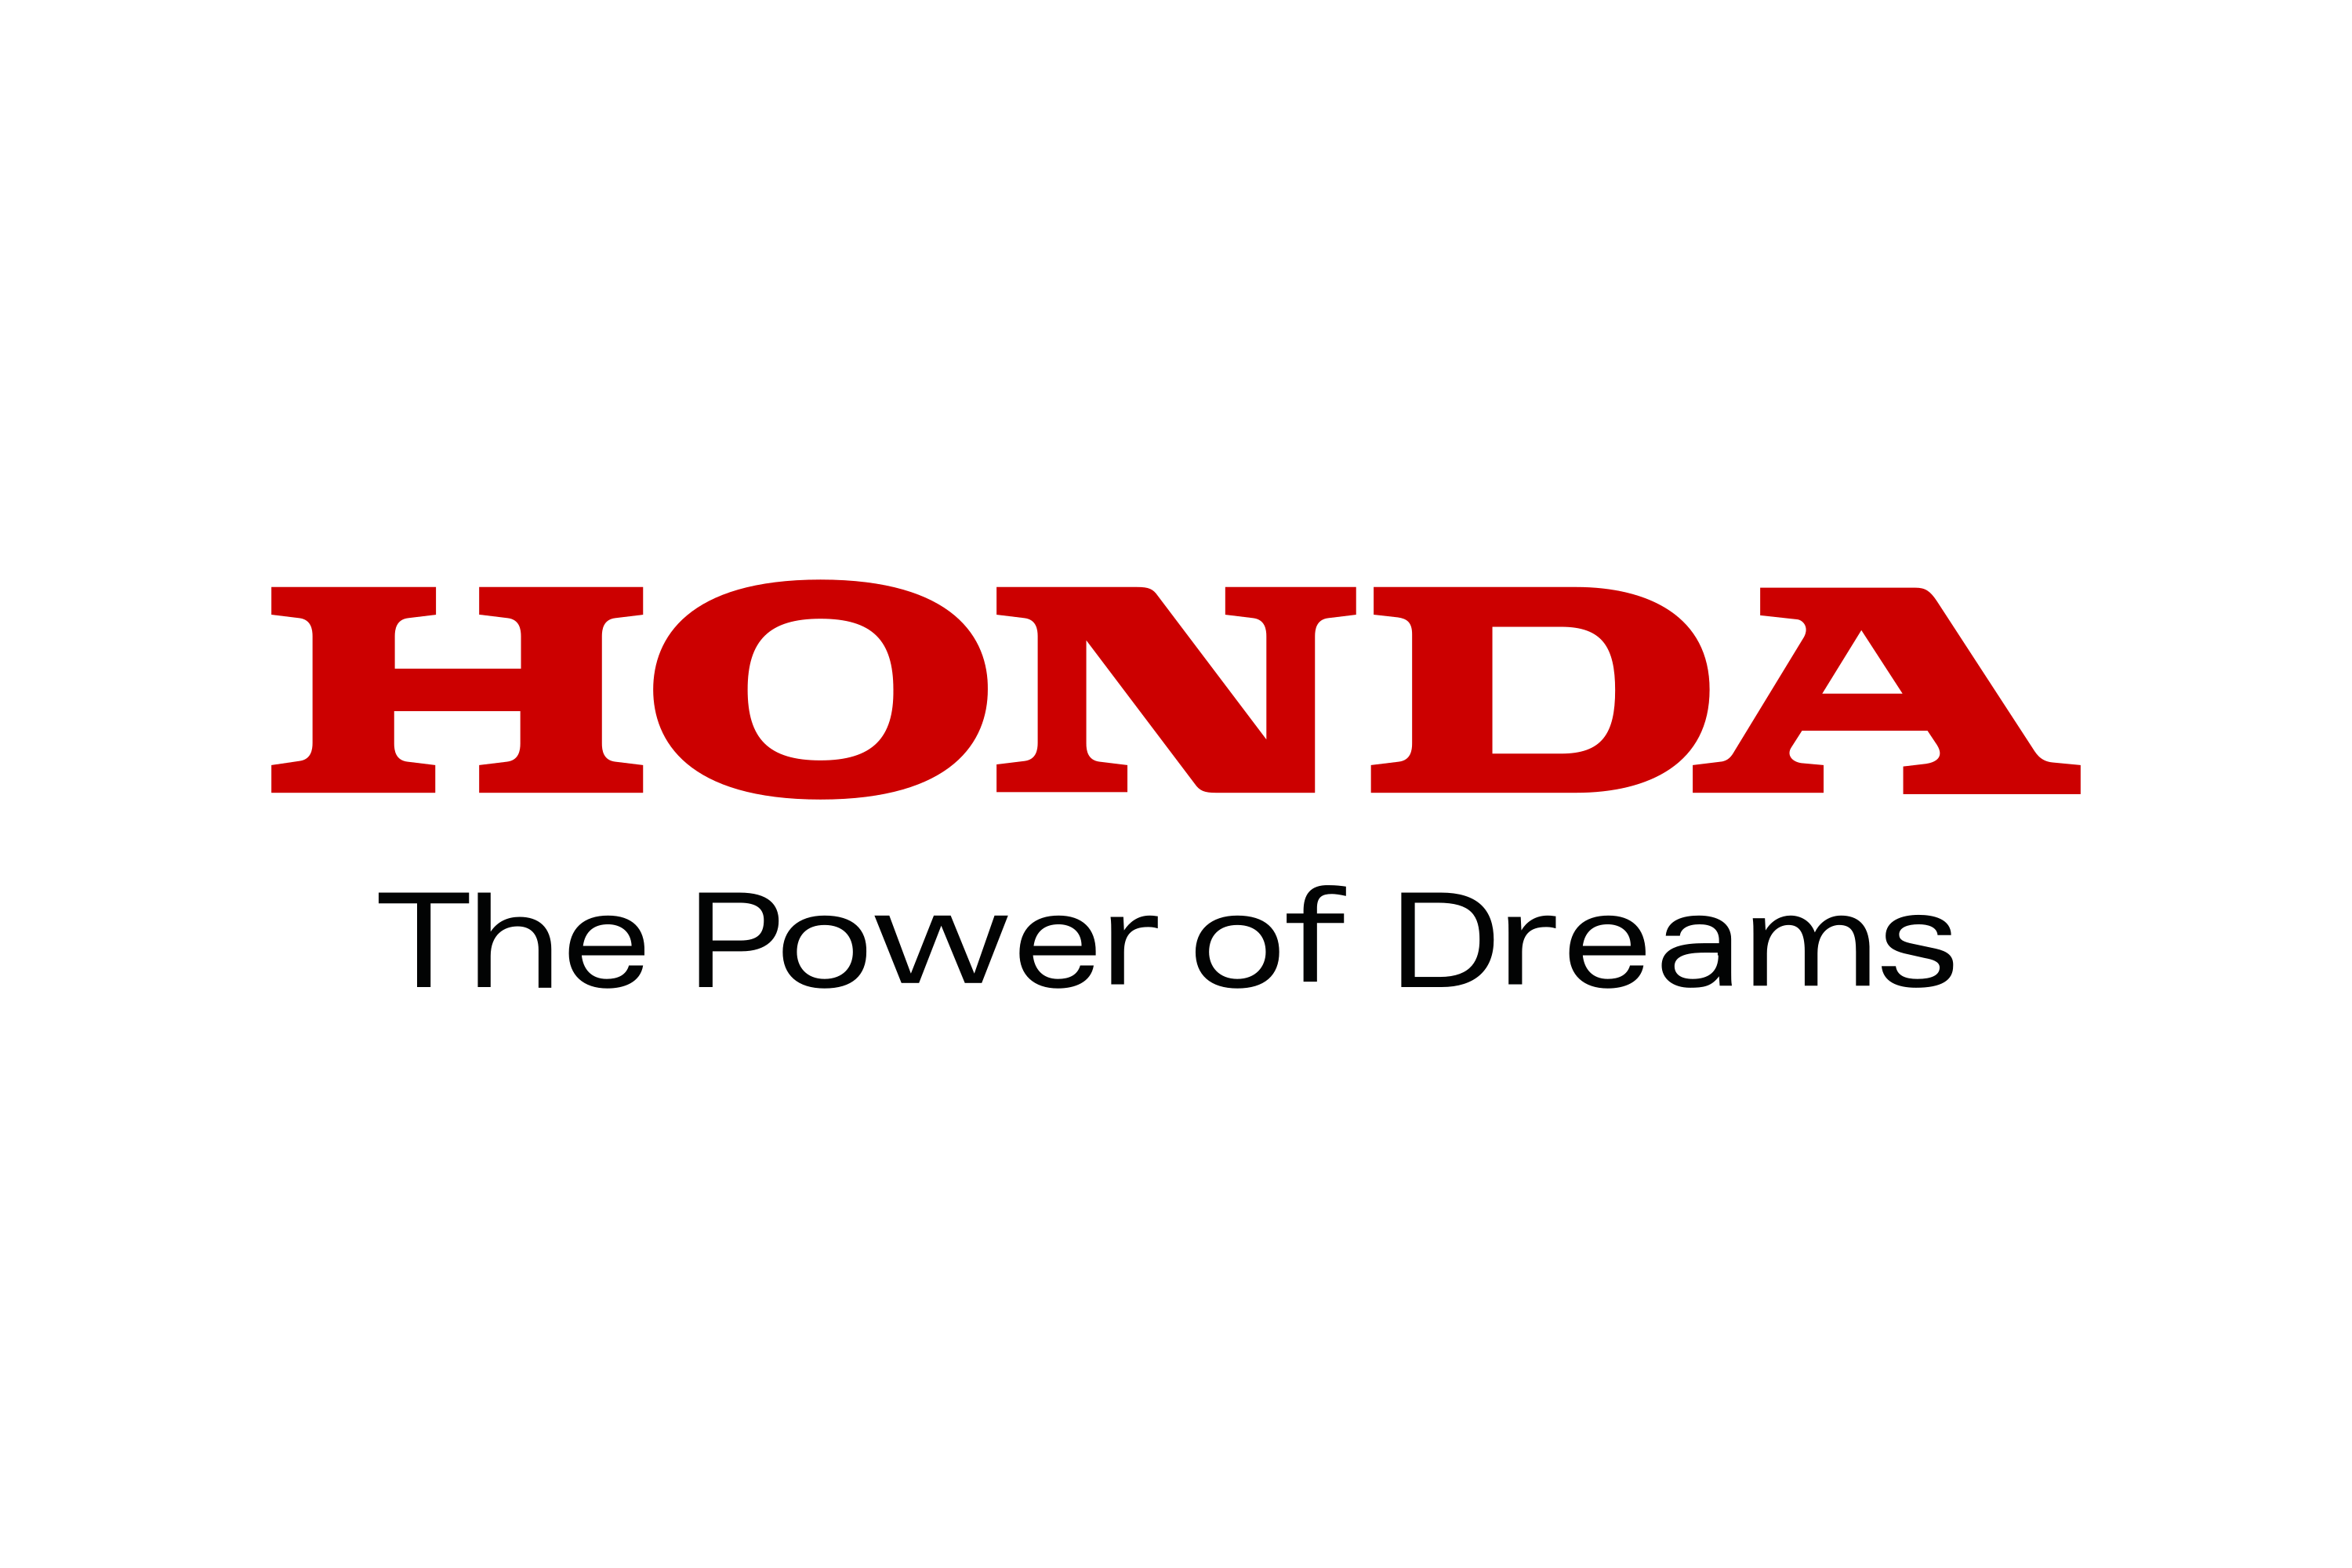 Download Honda Cars India Logo in SVG Vector or PNG File Format - Logo.wine